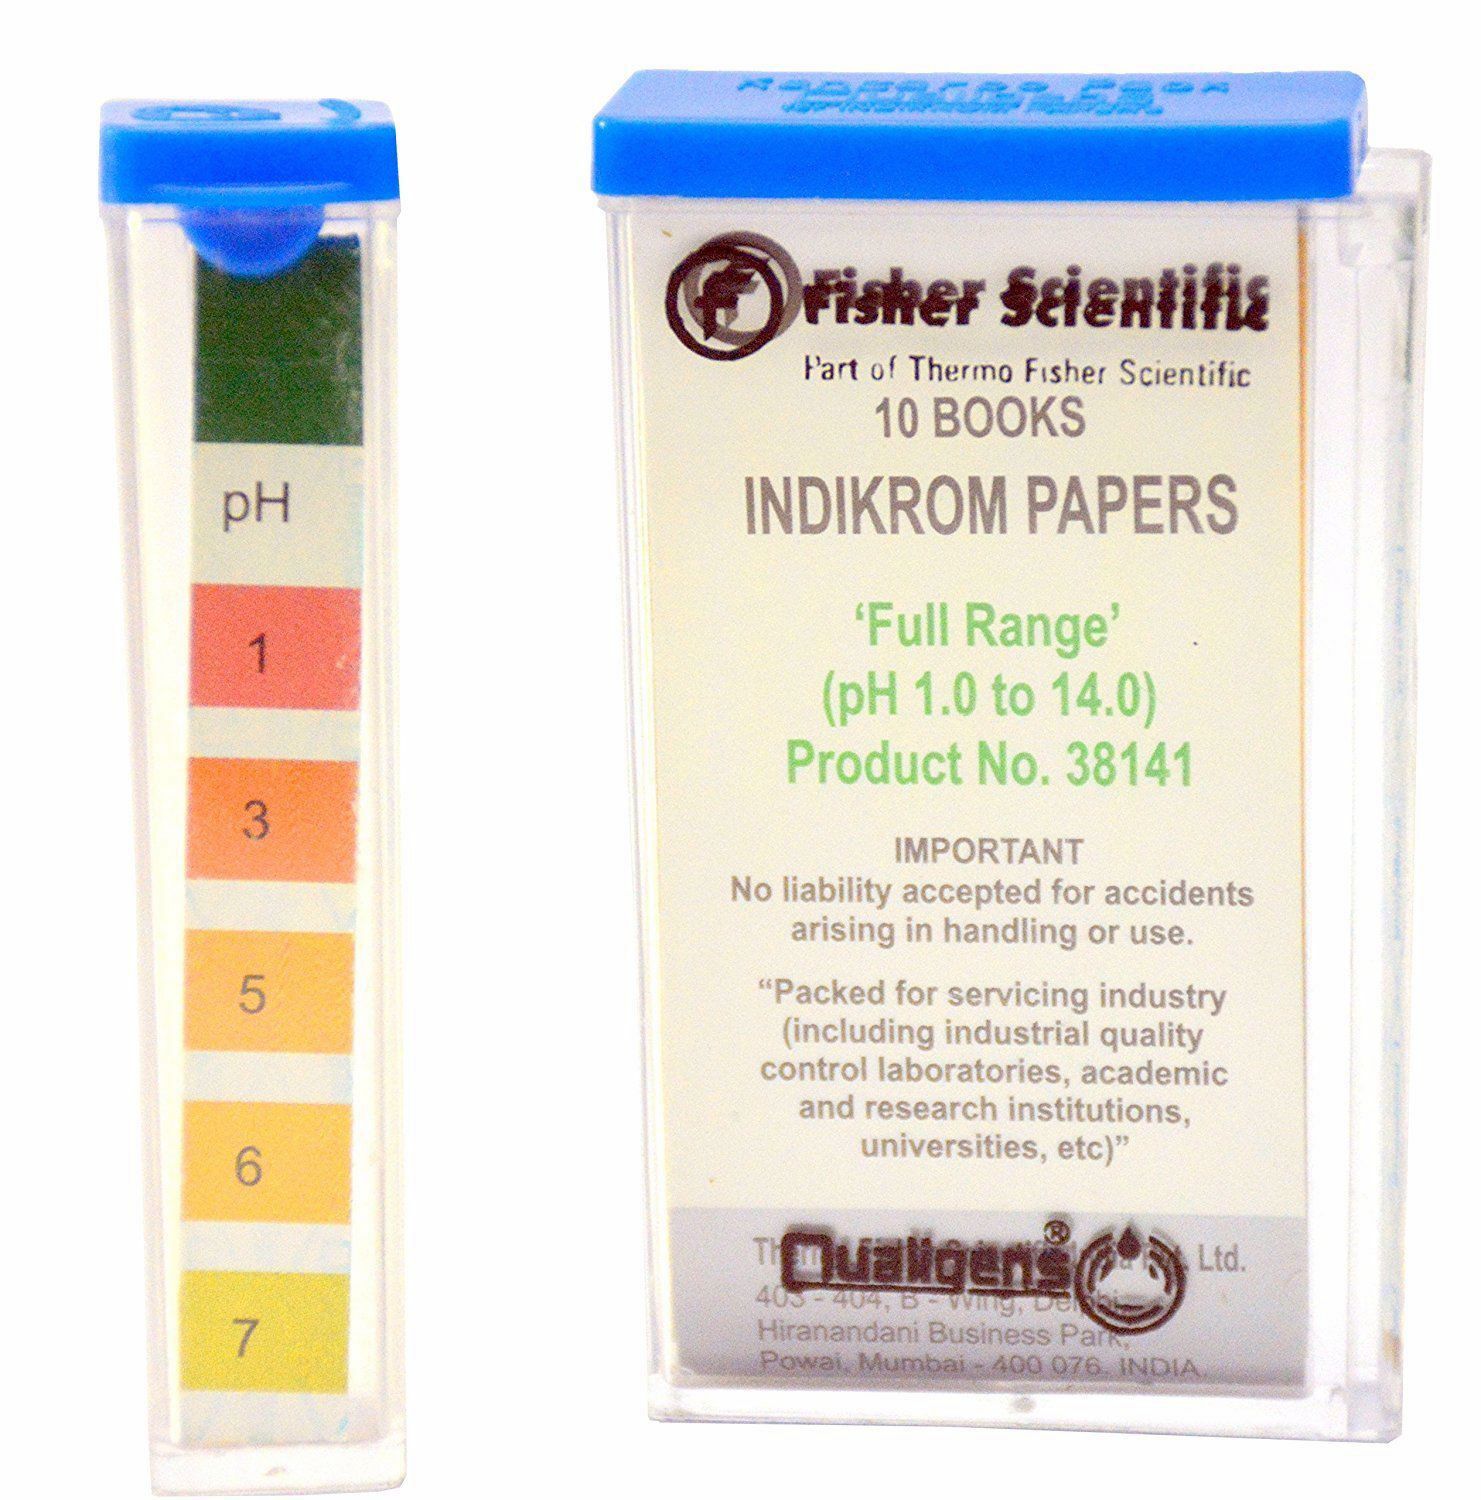 pH paper wide range 1-14 Fisher Scientific